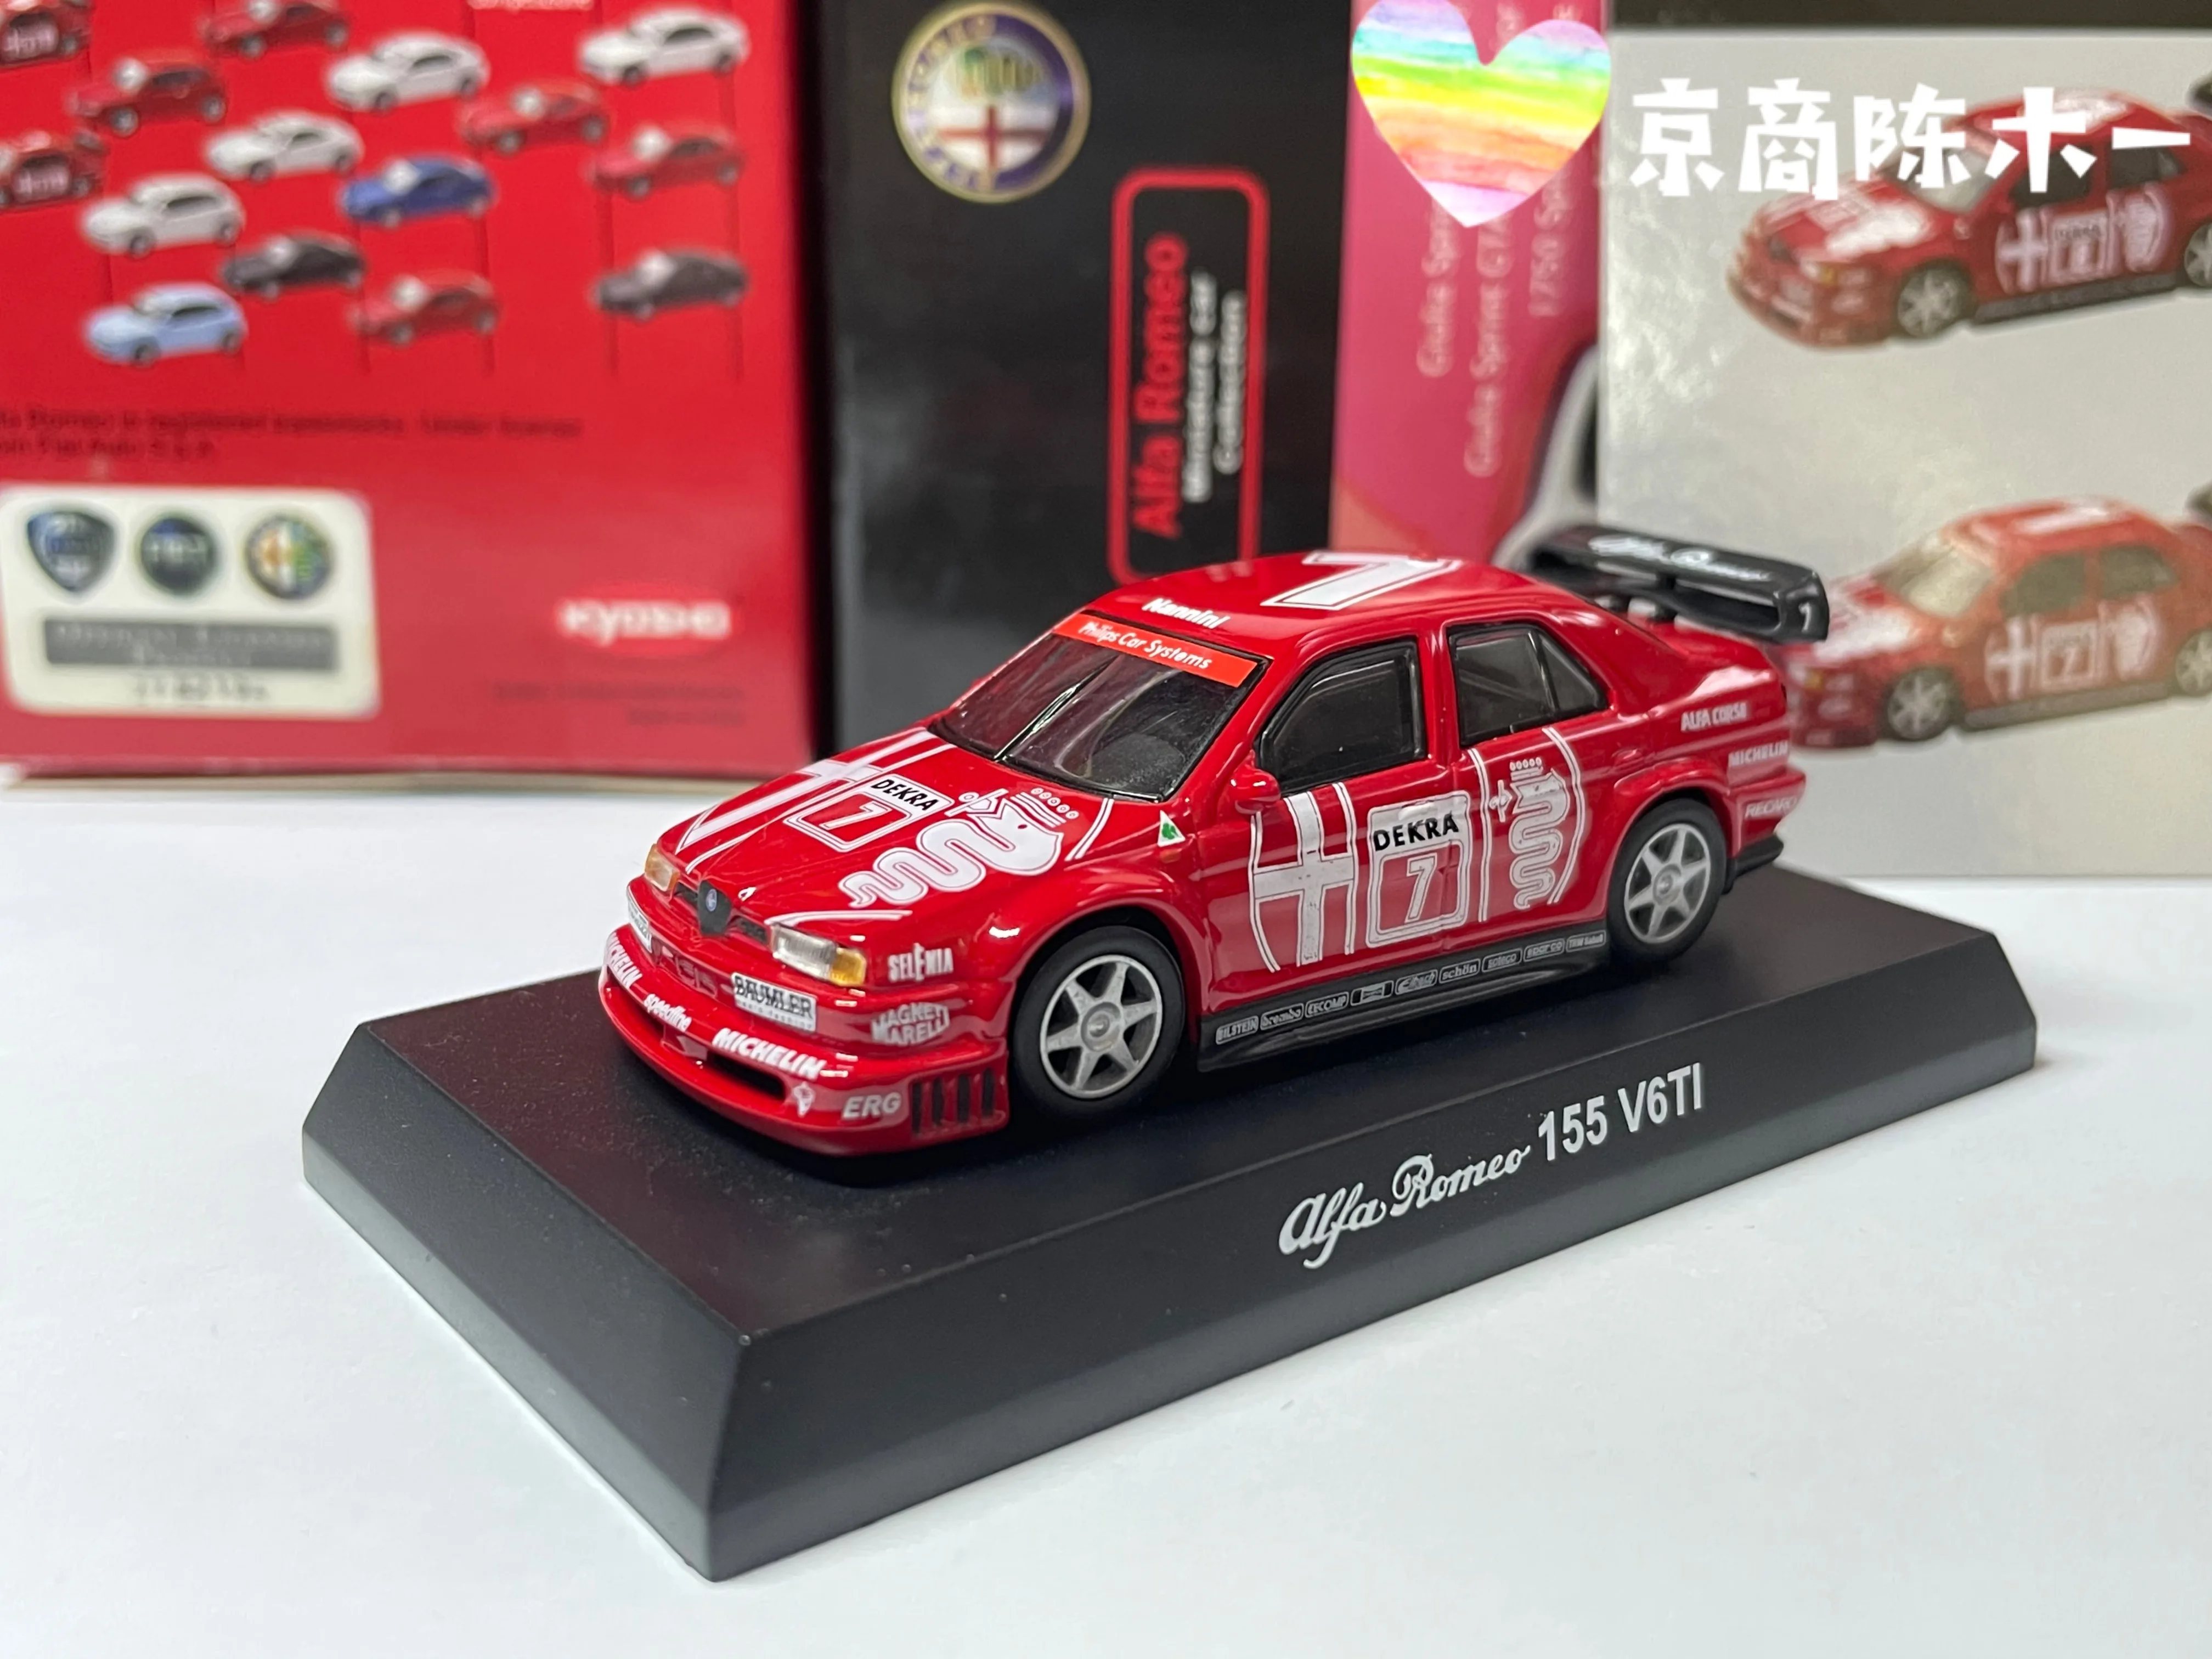 kyosho-modelo-alfa-romeo-1-64-v6-ti-7-dtm-lm-f1-racing-coleccion-de-coches-de-aleacion-fundida-a-presion-decoracion-juguetes-155